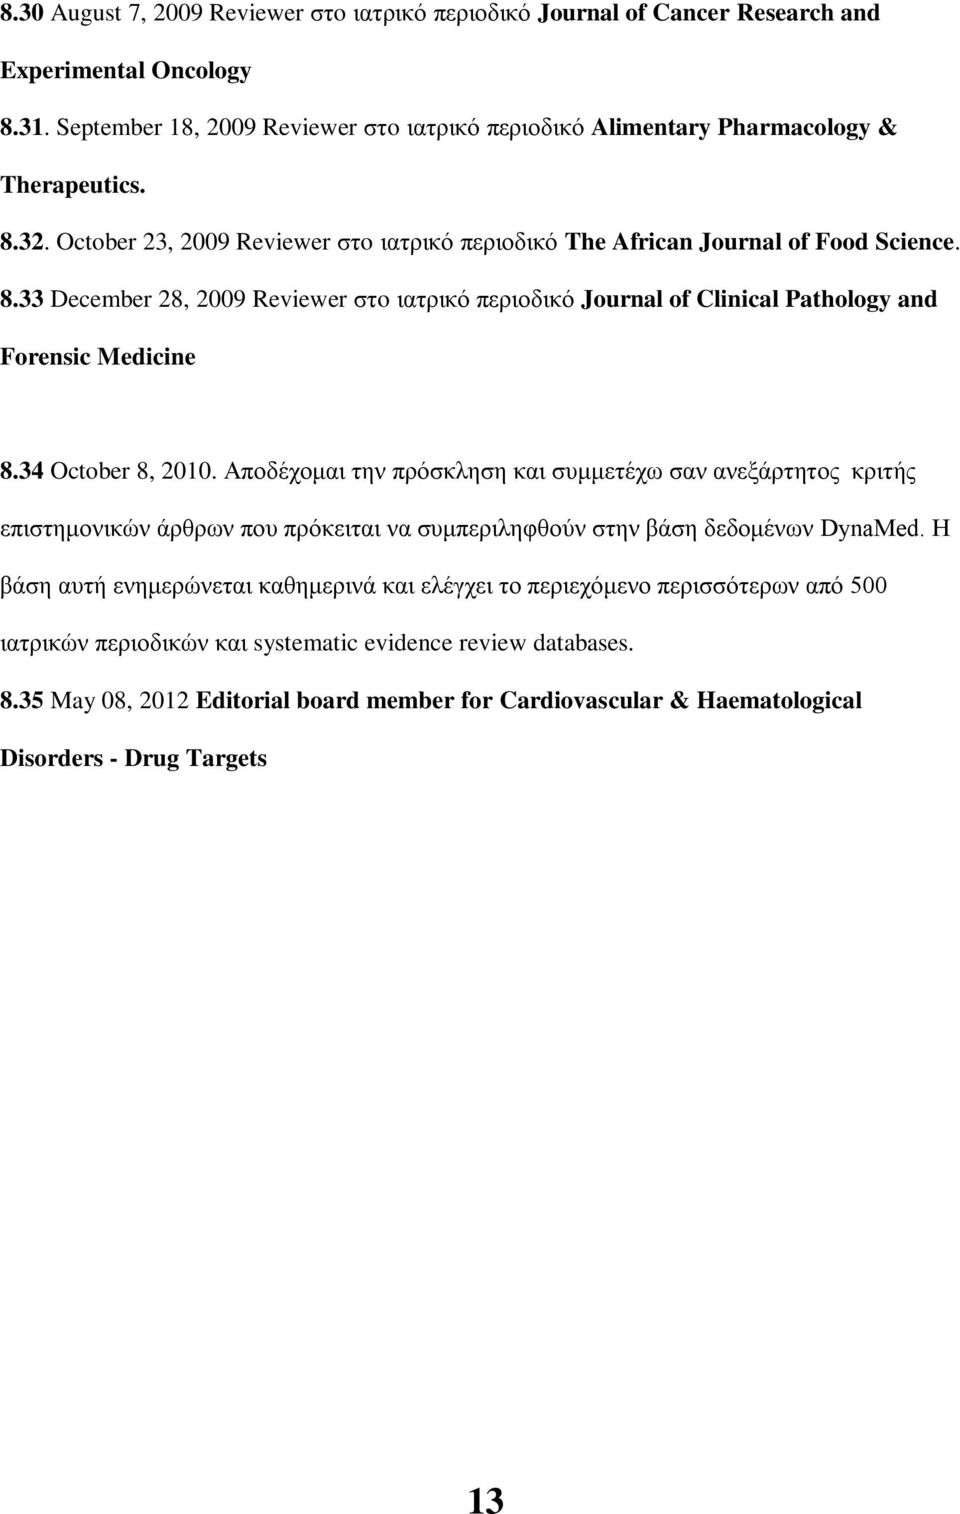 34 October 8, 2010. Αποδέχομαι την πρόσκληση και συμμετέχω σαν ανεξάρτητος κριτής επιστημονικών άρθρων που πρόκειται να συμπεριληφθούν στην βάση δεδομένων DynaMed.